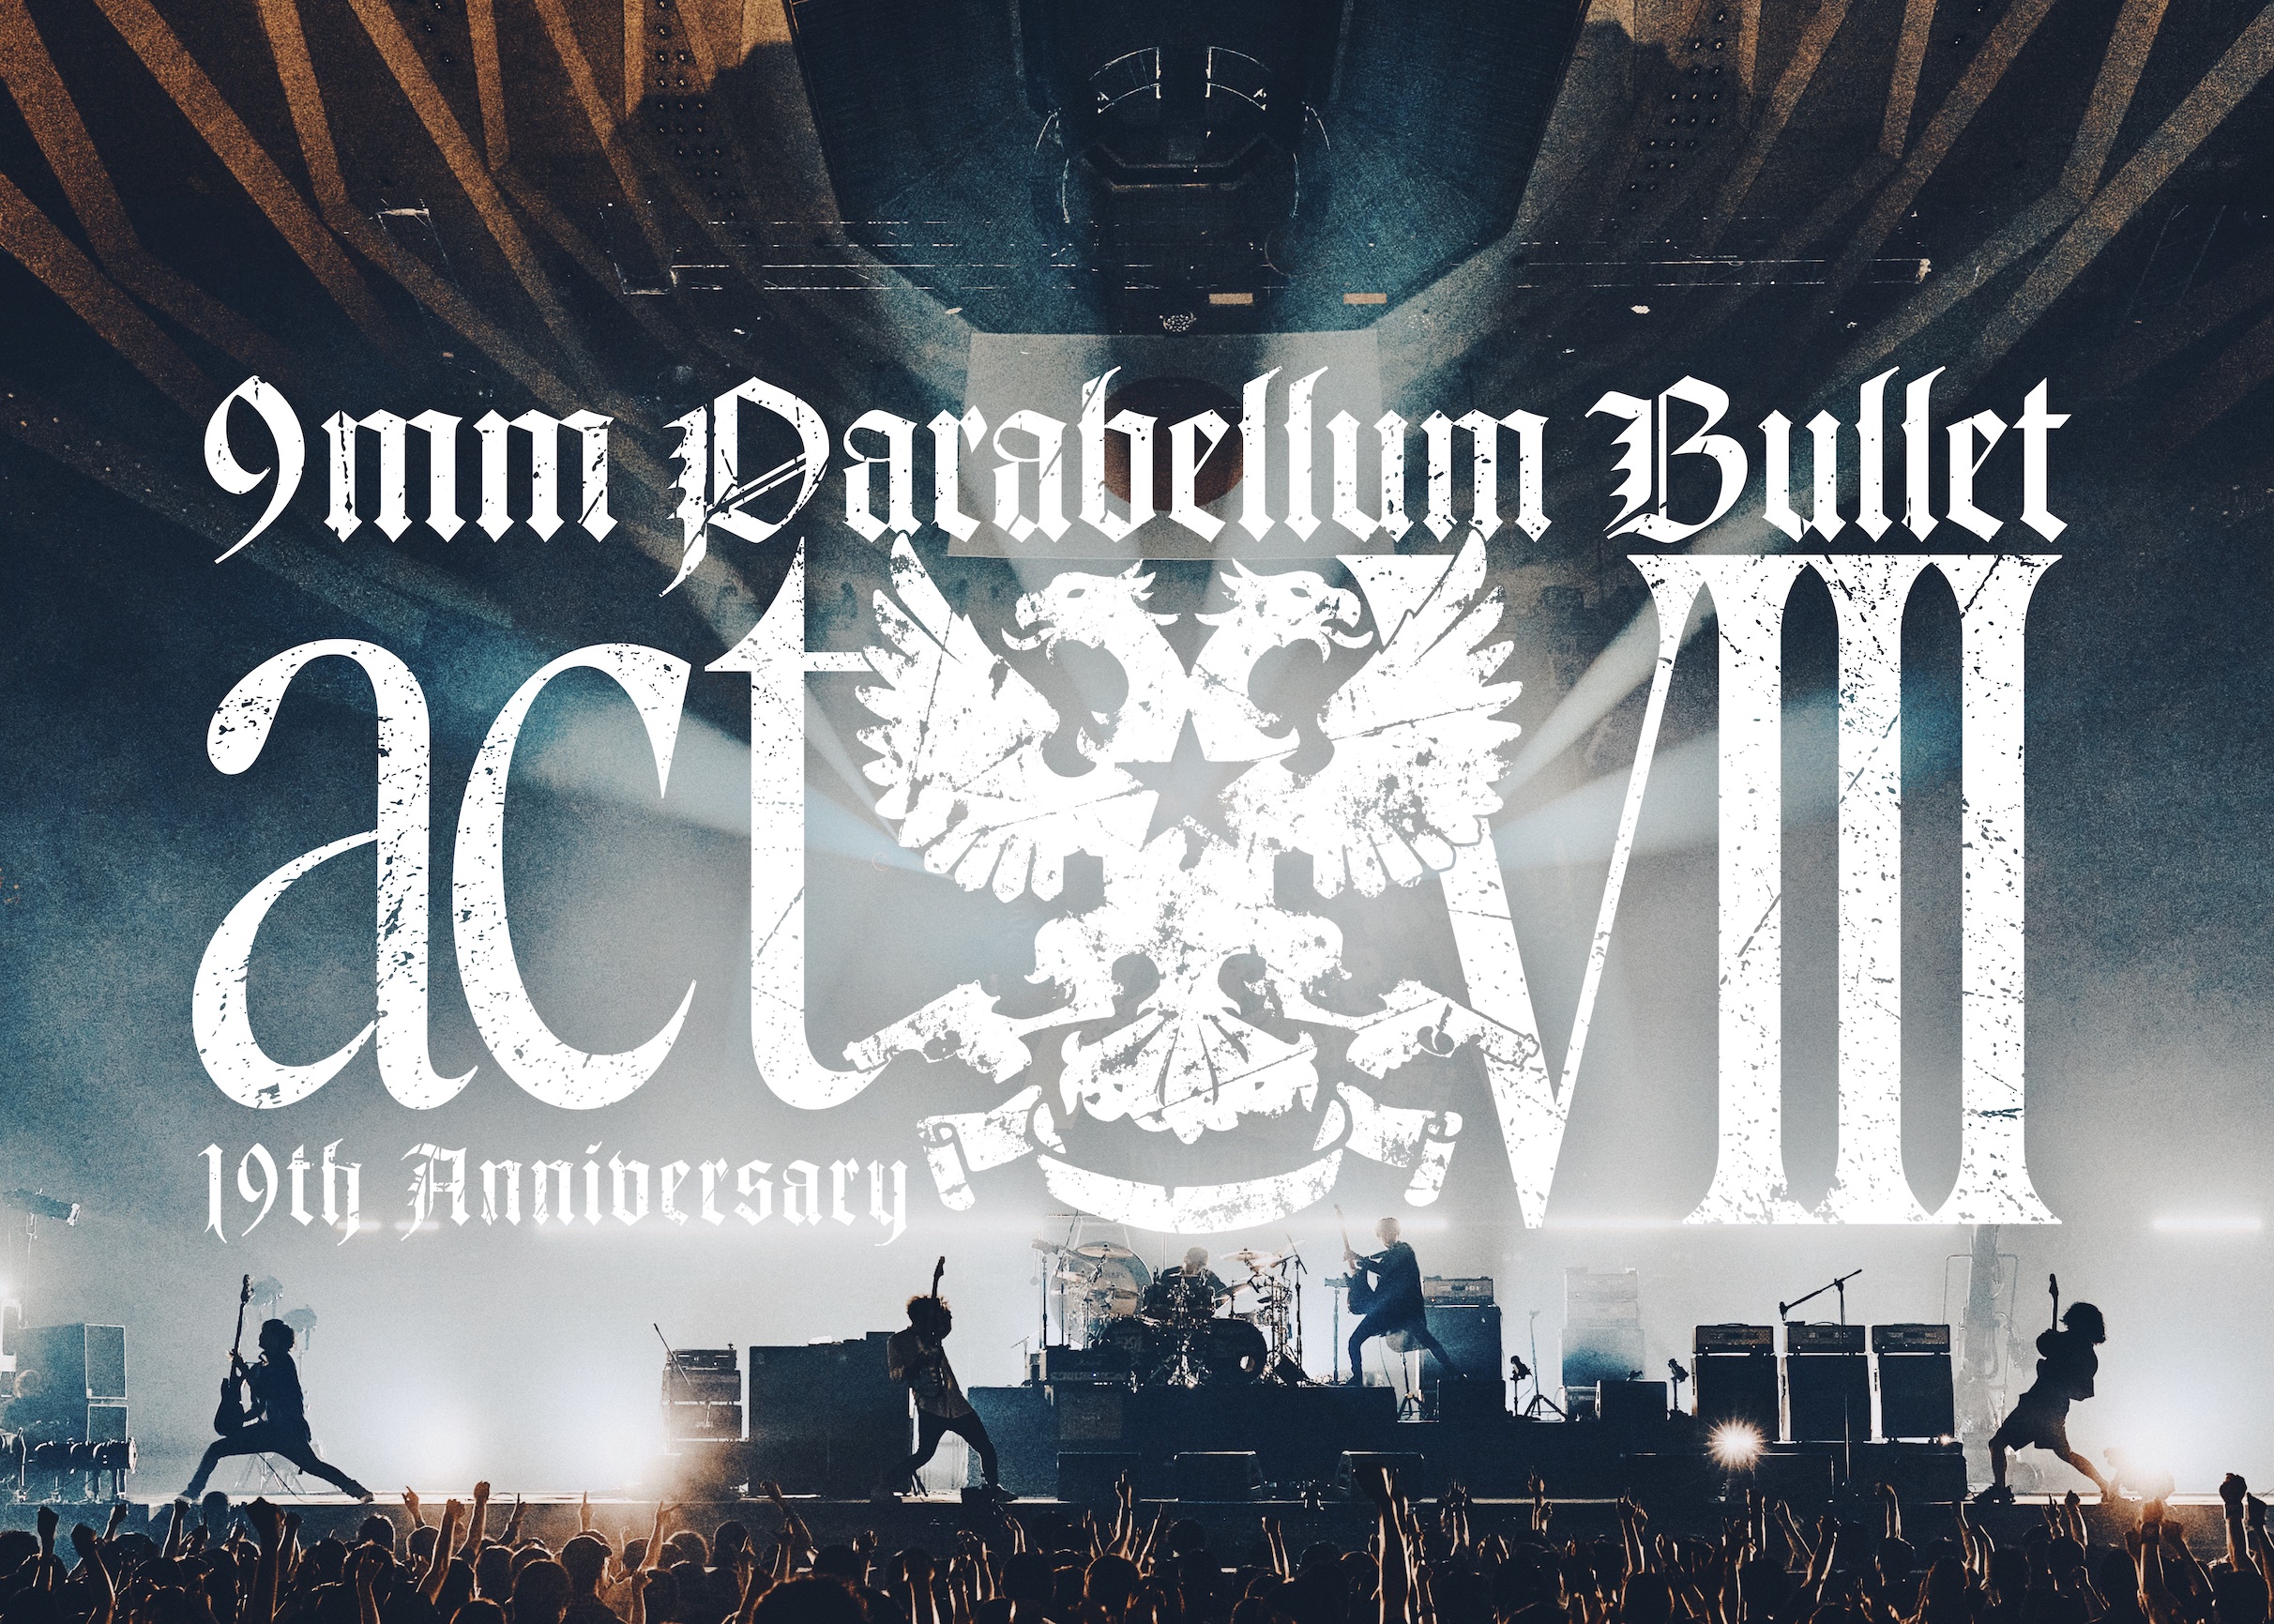 9mm Parabellum Bullet official site